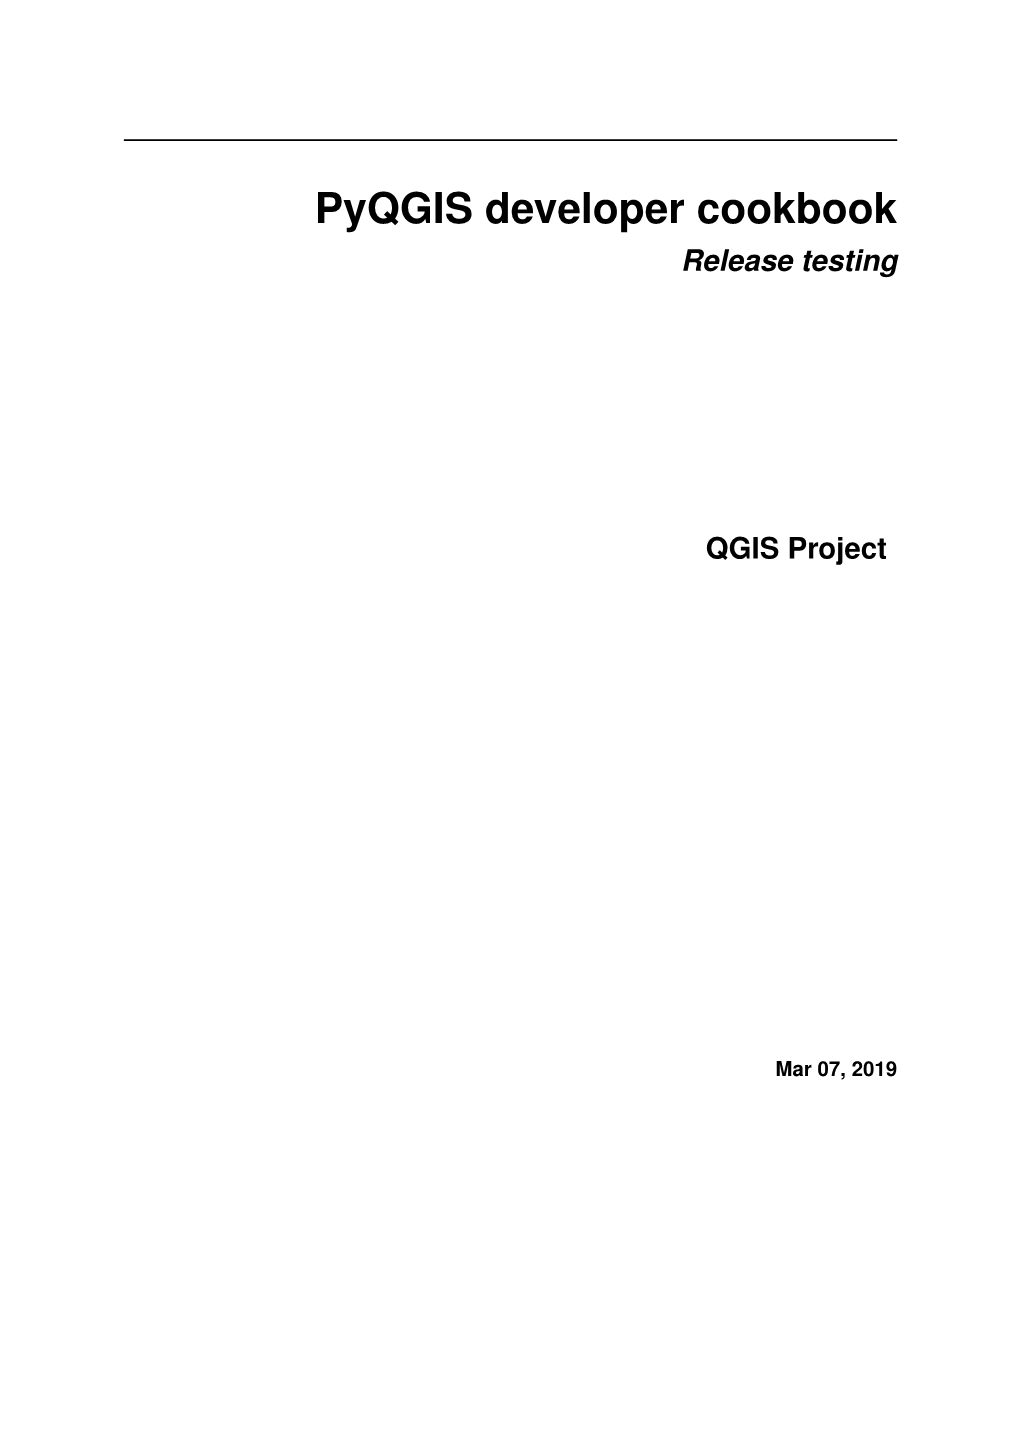 Pyqgis Developer Cookbook Release Testing